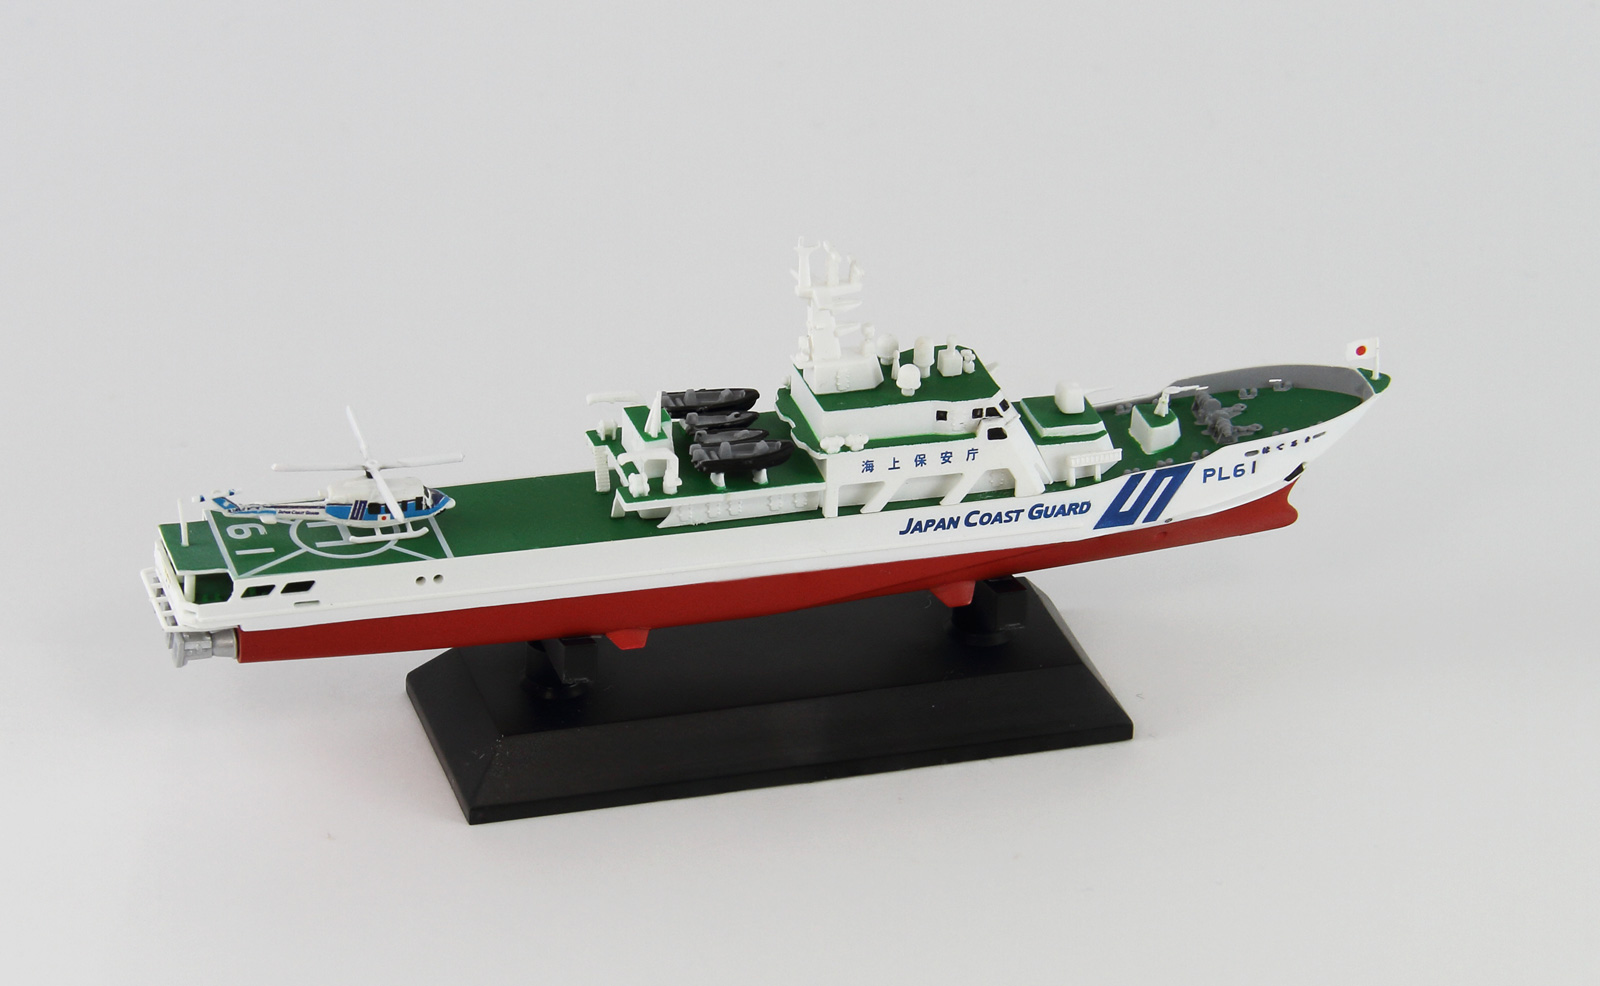 JP18 1/700 海上保安庁 はてるま型巡視船 塗装済みプラモデル – ピット 